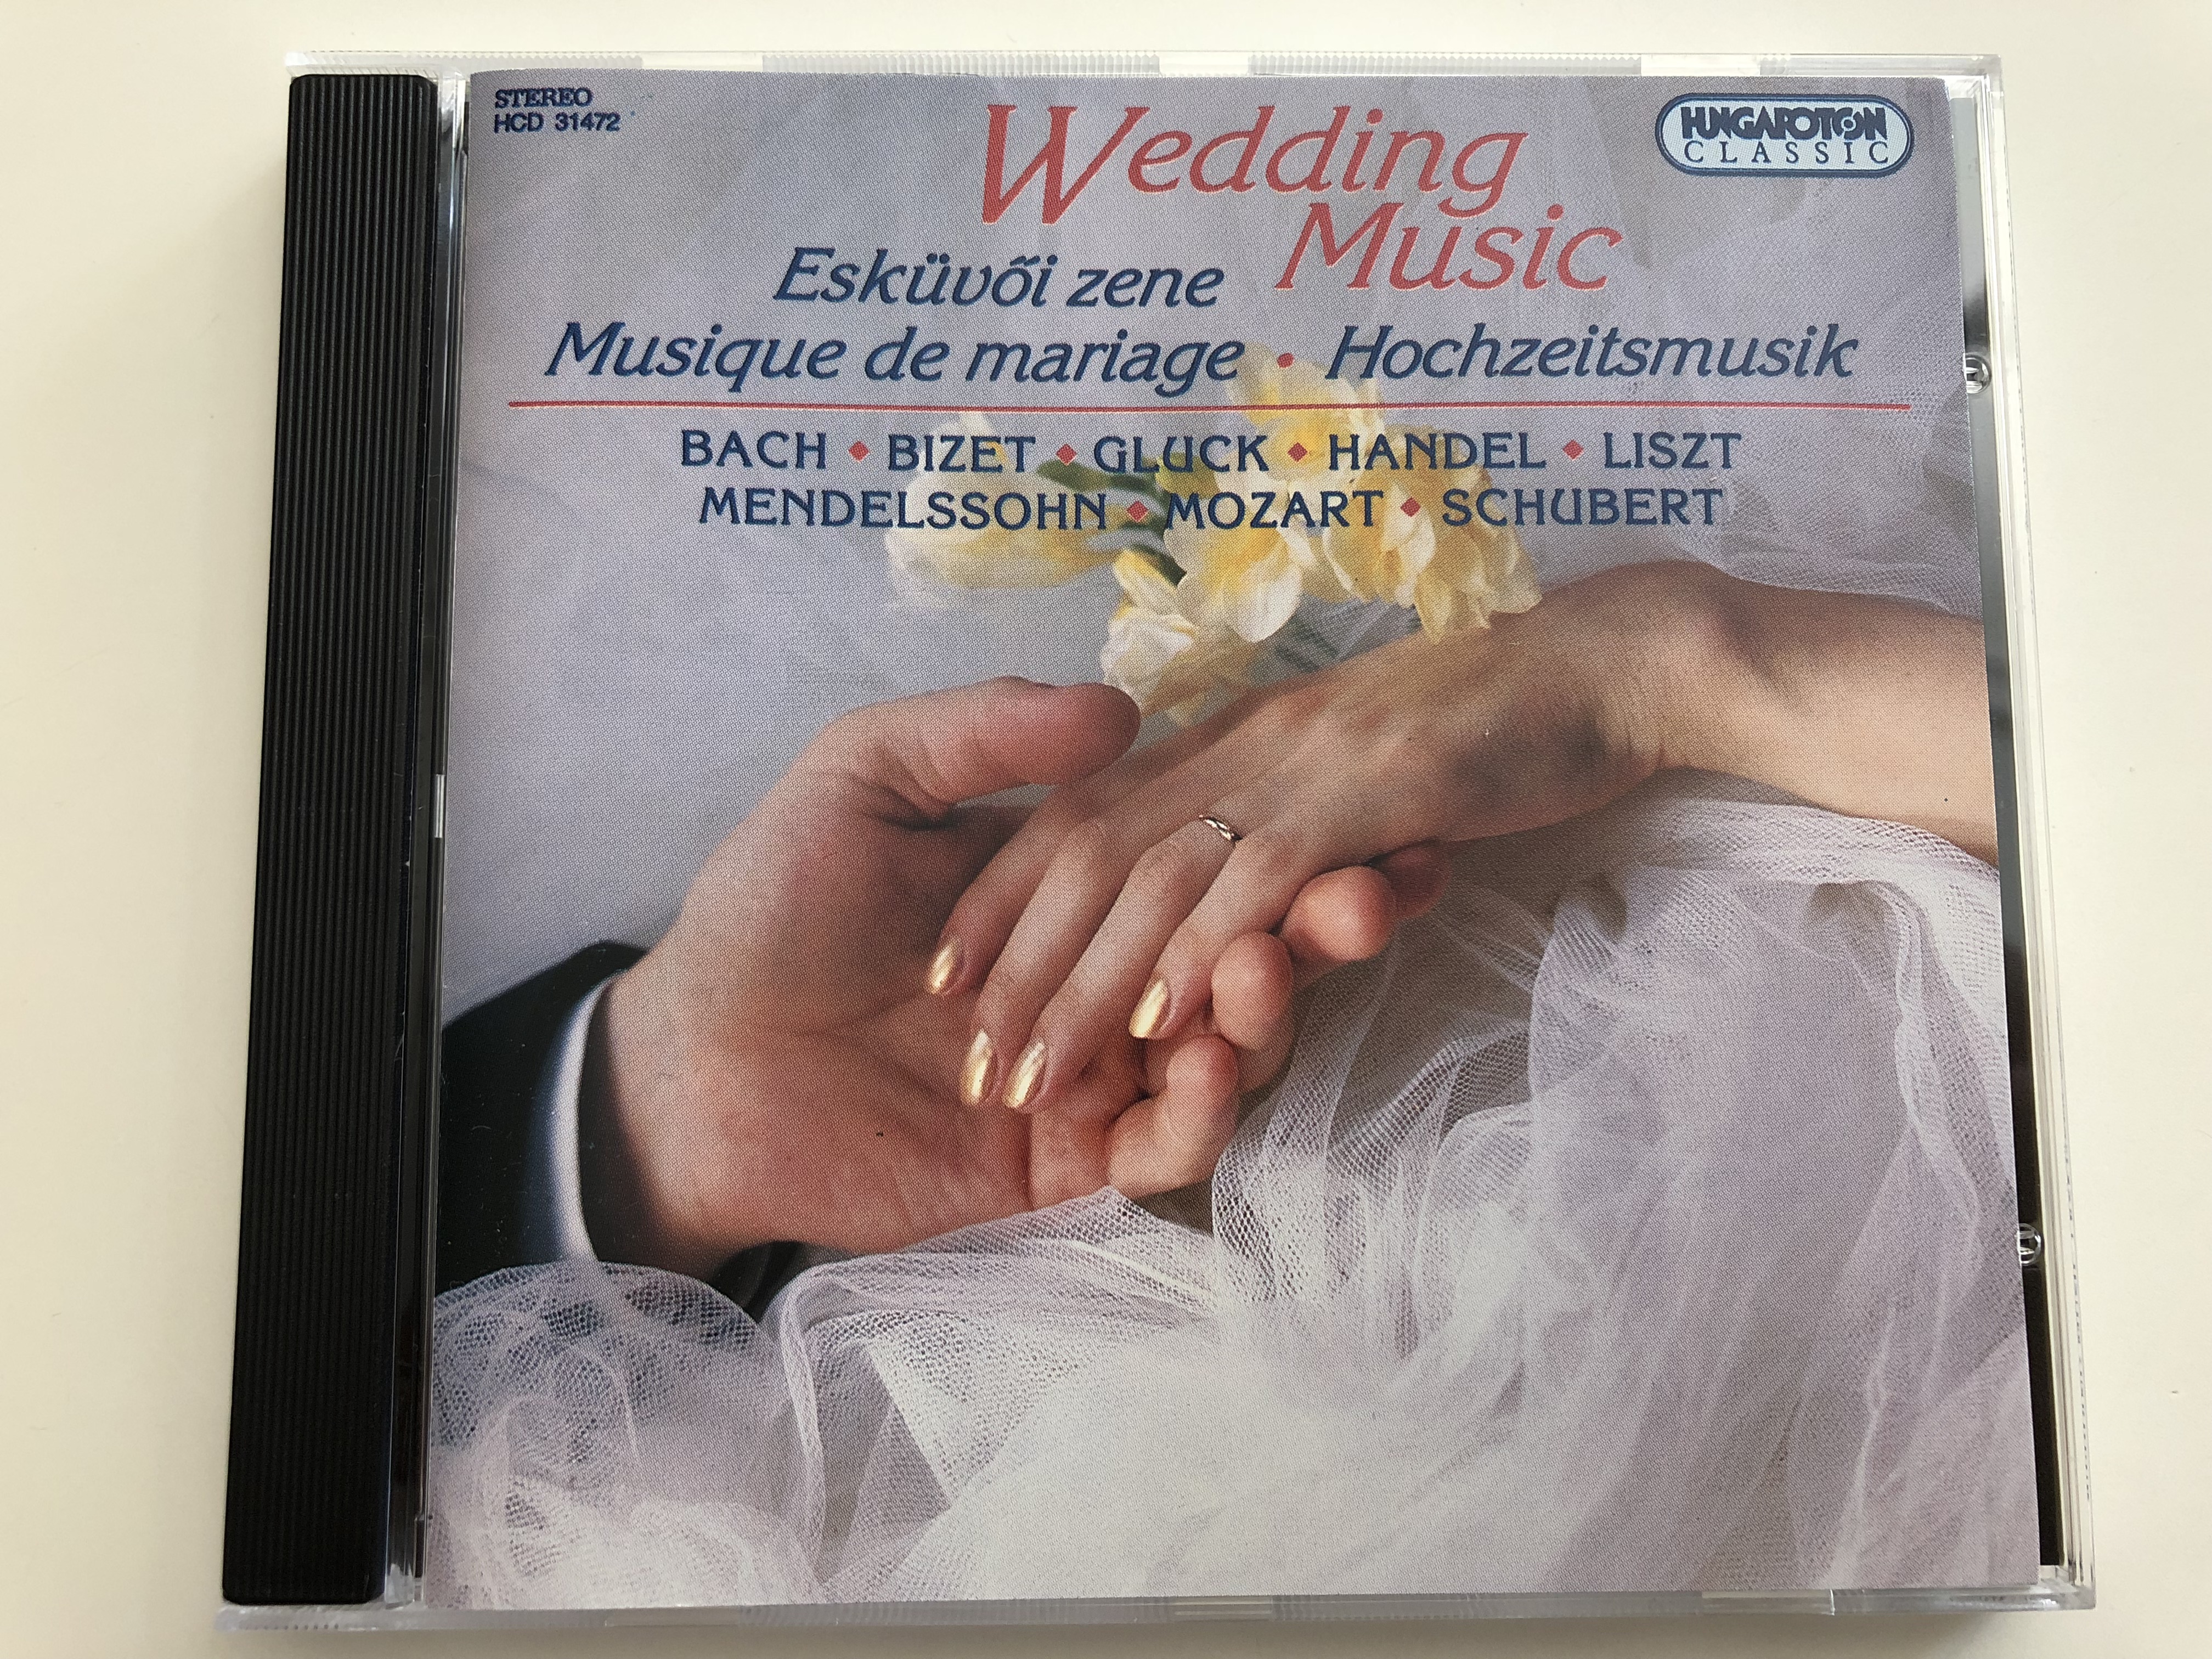 wedding-music-esk-v-i-zene-musique-de-mariage-bach-bizet-gluck-handel-liszt-mendelssohn-mozart-schubert-hungaroton-classic-audio-cd-1995-hcd-31472-1-.jpg